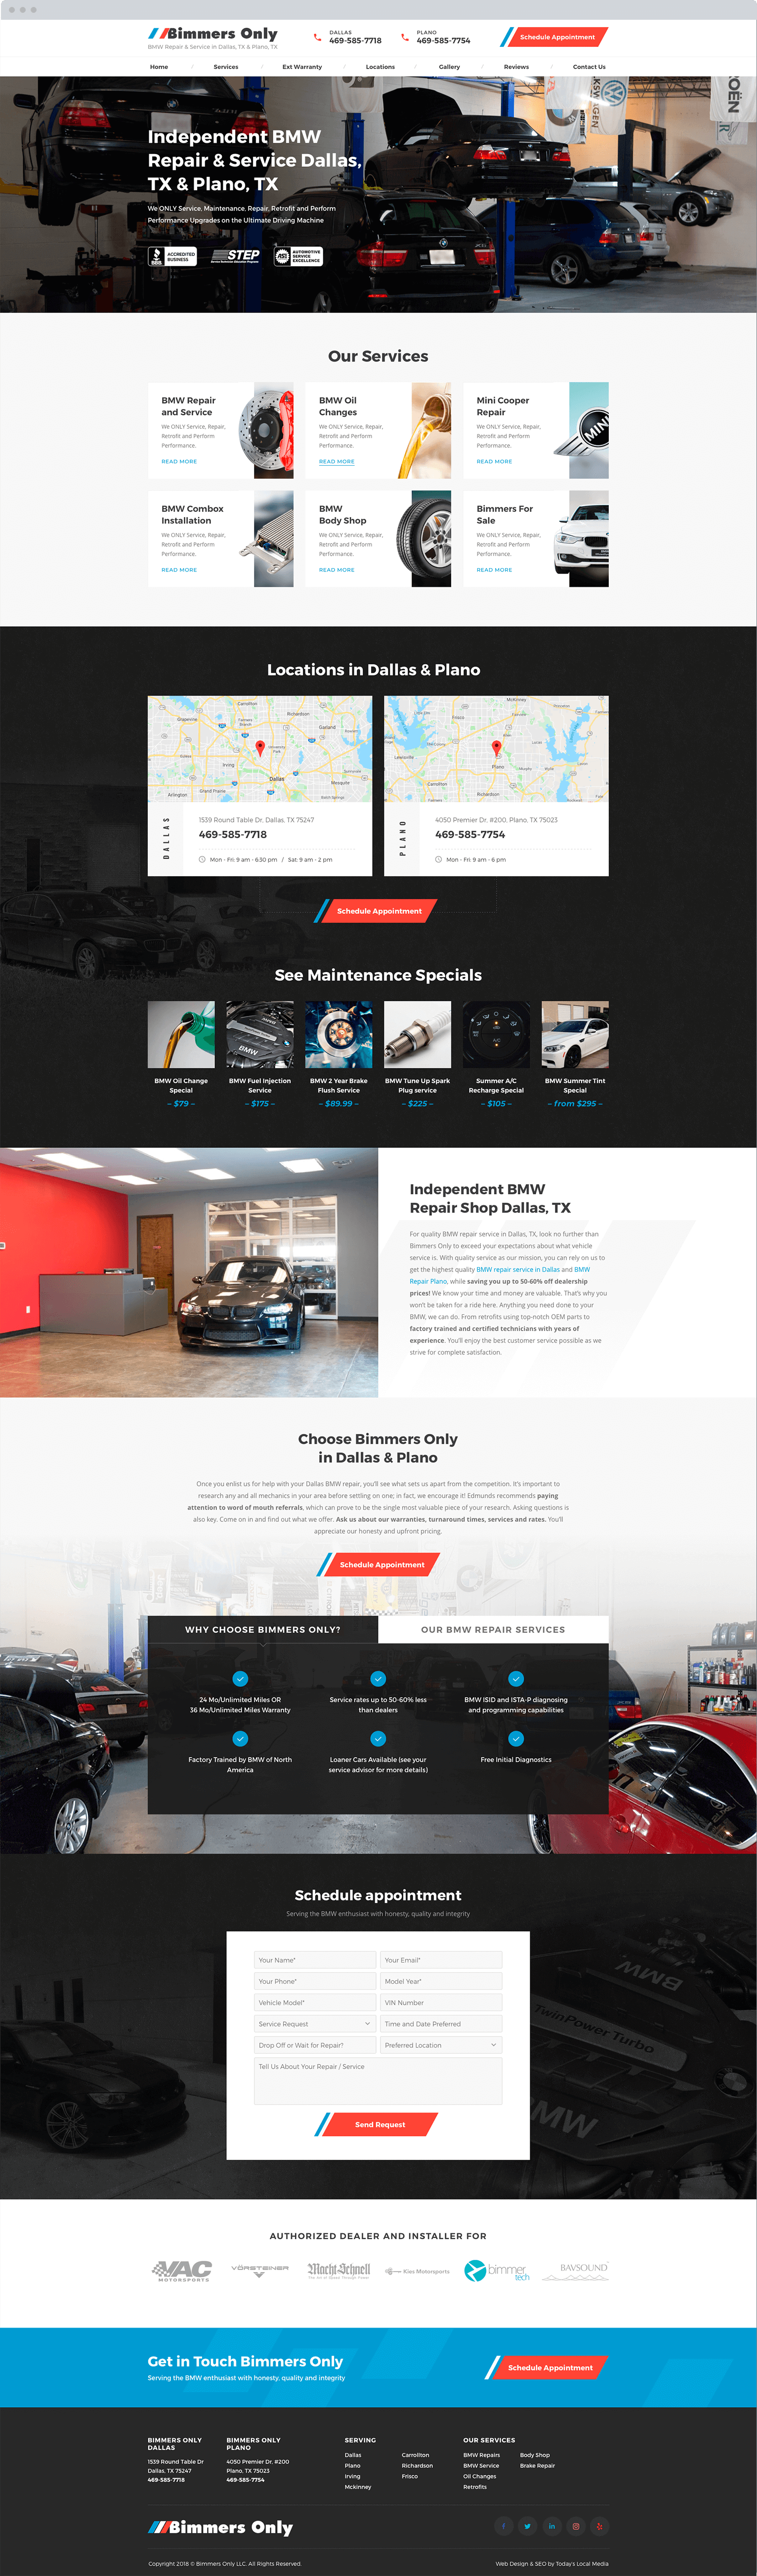 Website Design for Local Auto Repair Company